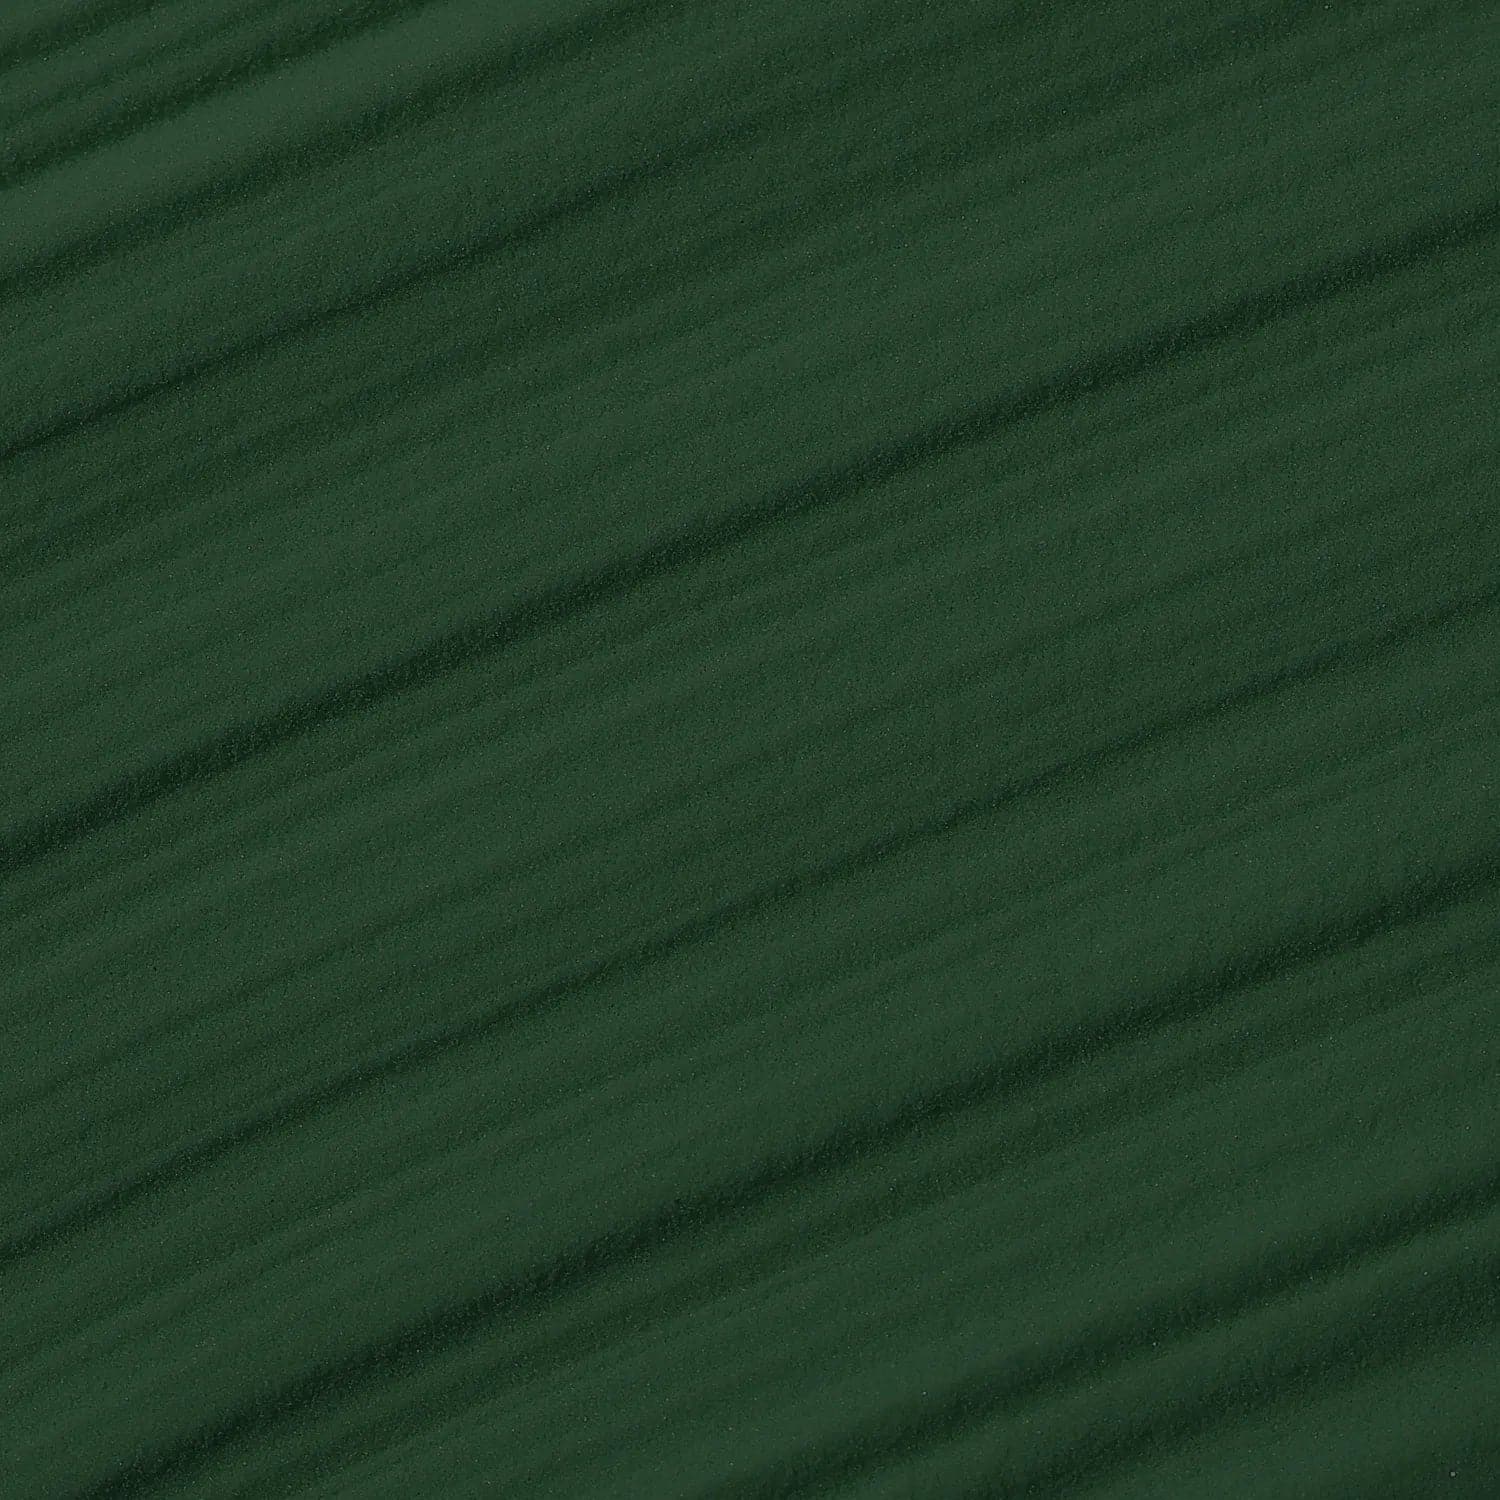 Modelones Dip Powder Nails (0.42 Oz) - Graphite Green